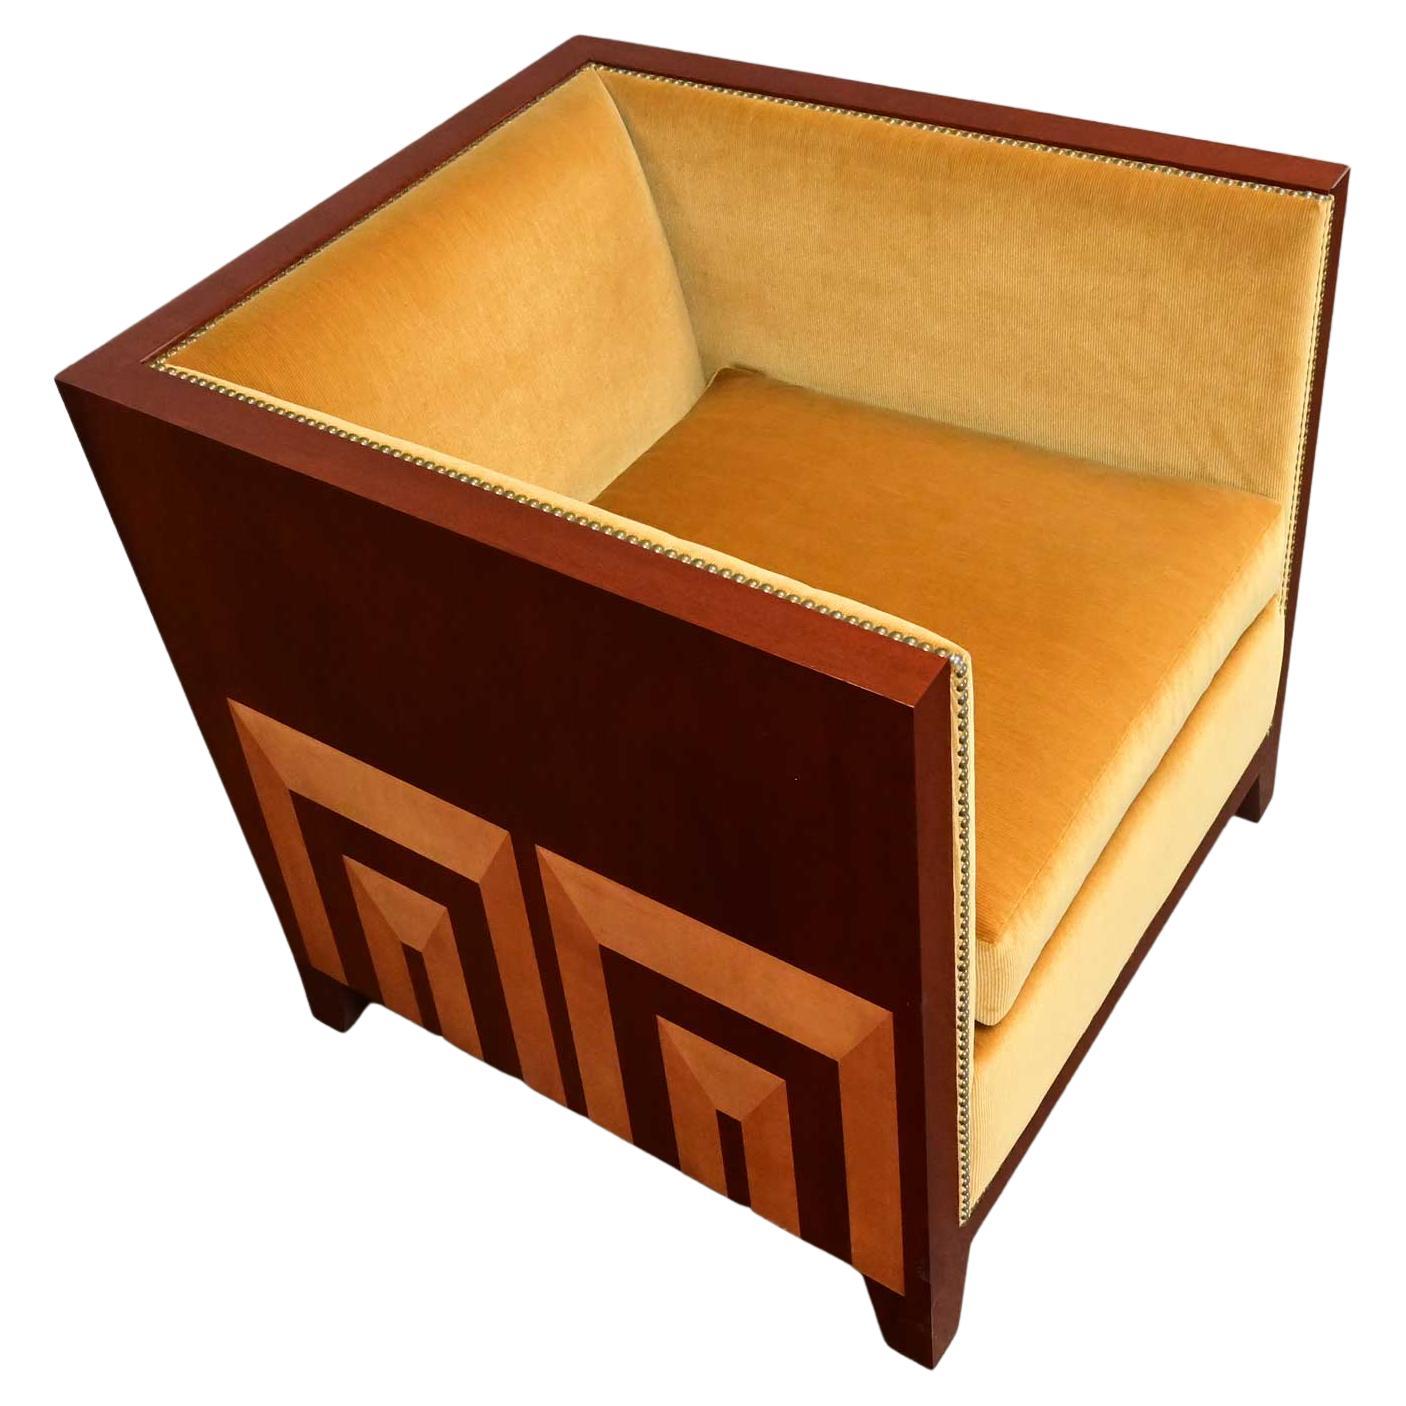 Ende des 20. Jahrhunderts Art Deco Revival Custom Designed Zwei getönten Mahagoni Club Chair